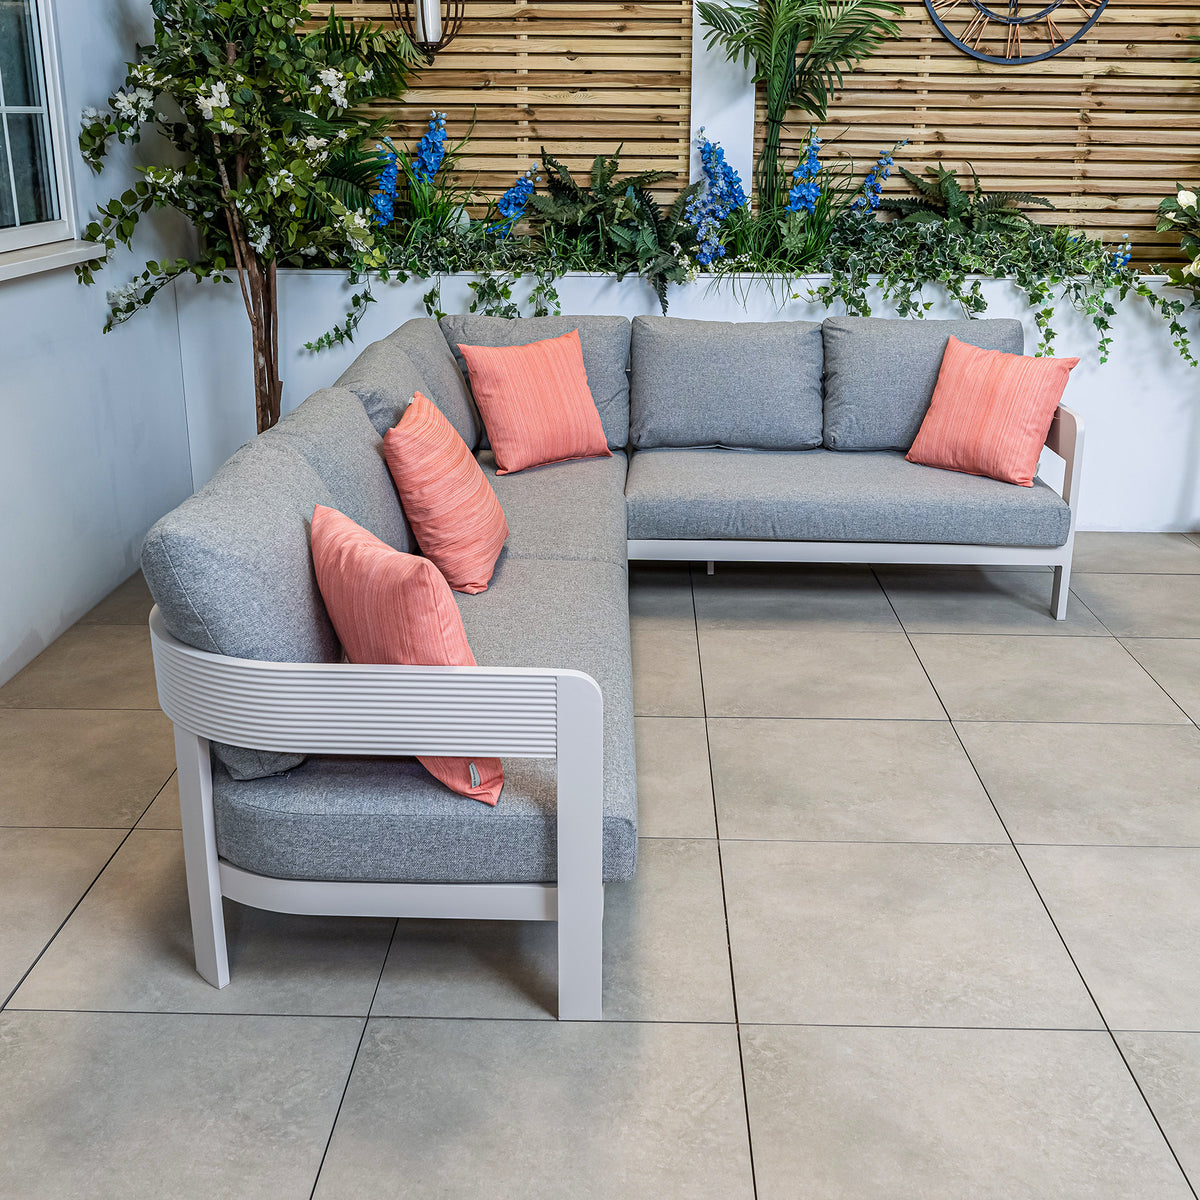 Bracken Outdoors Nevada Warm Grey Ripple Aluminium Rectangular Corner Garden Furniture Sofa Set